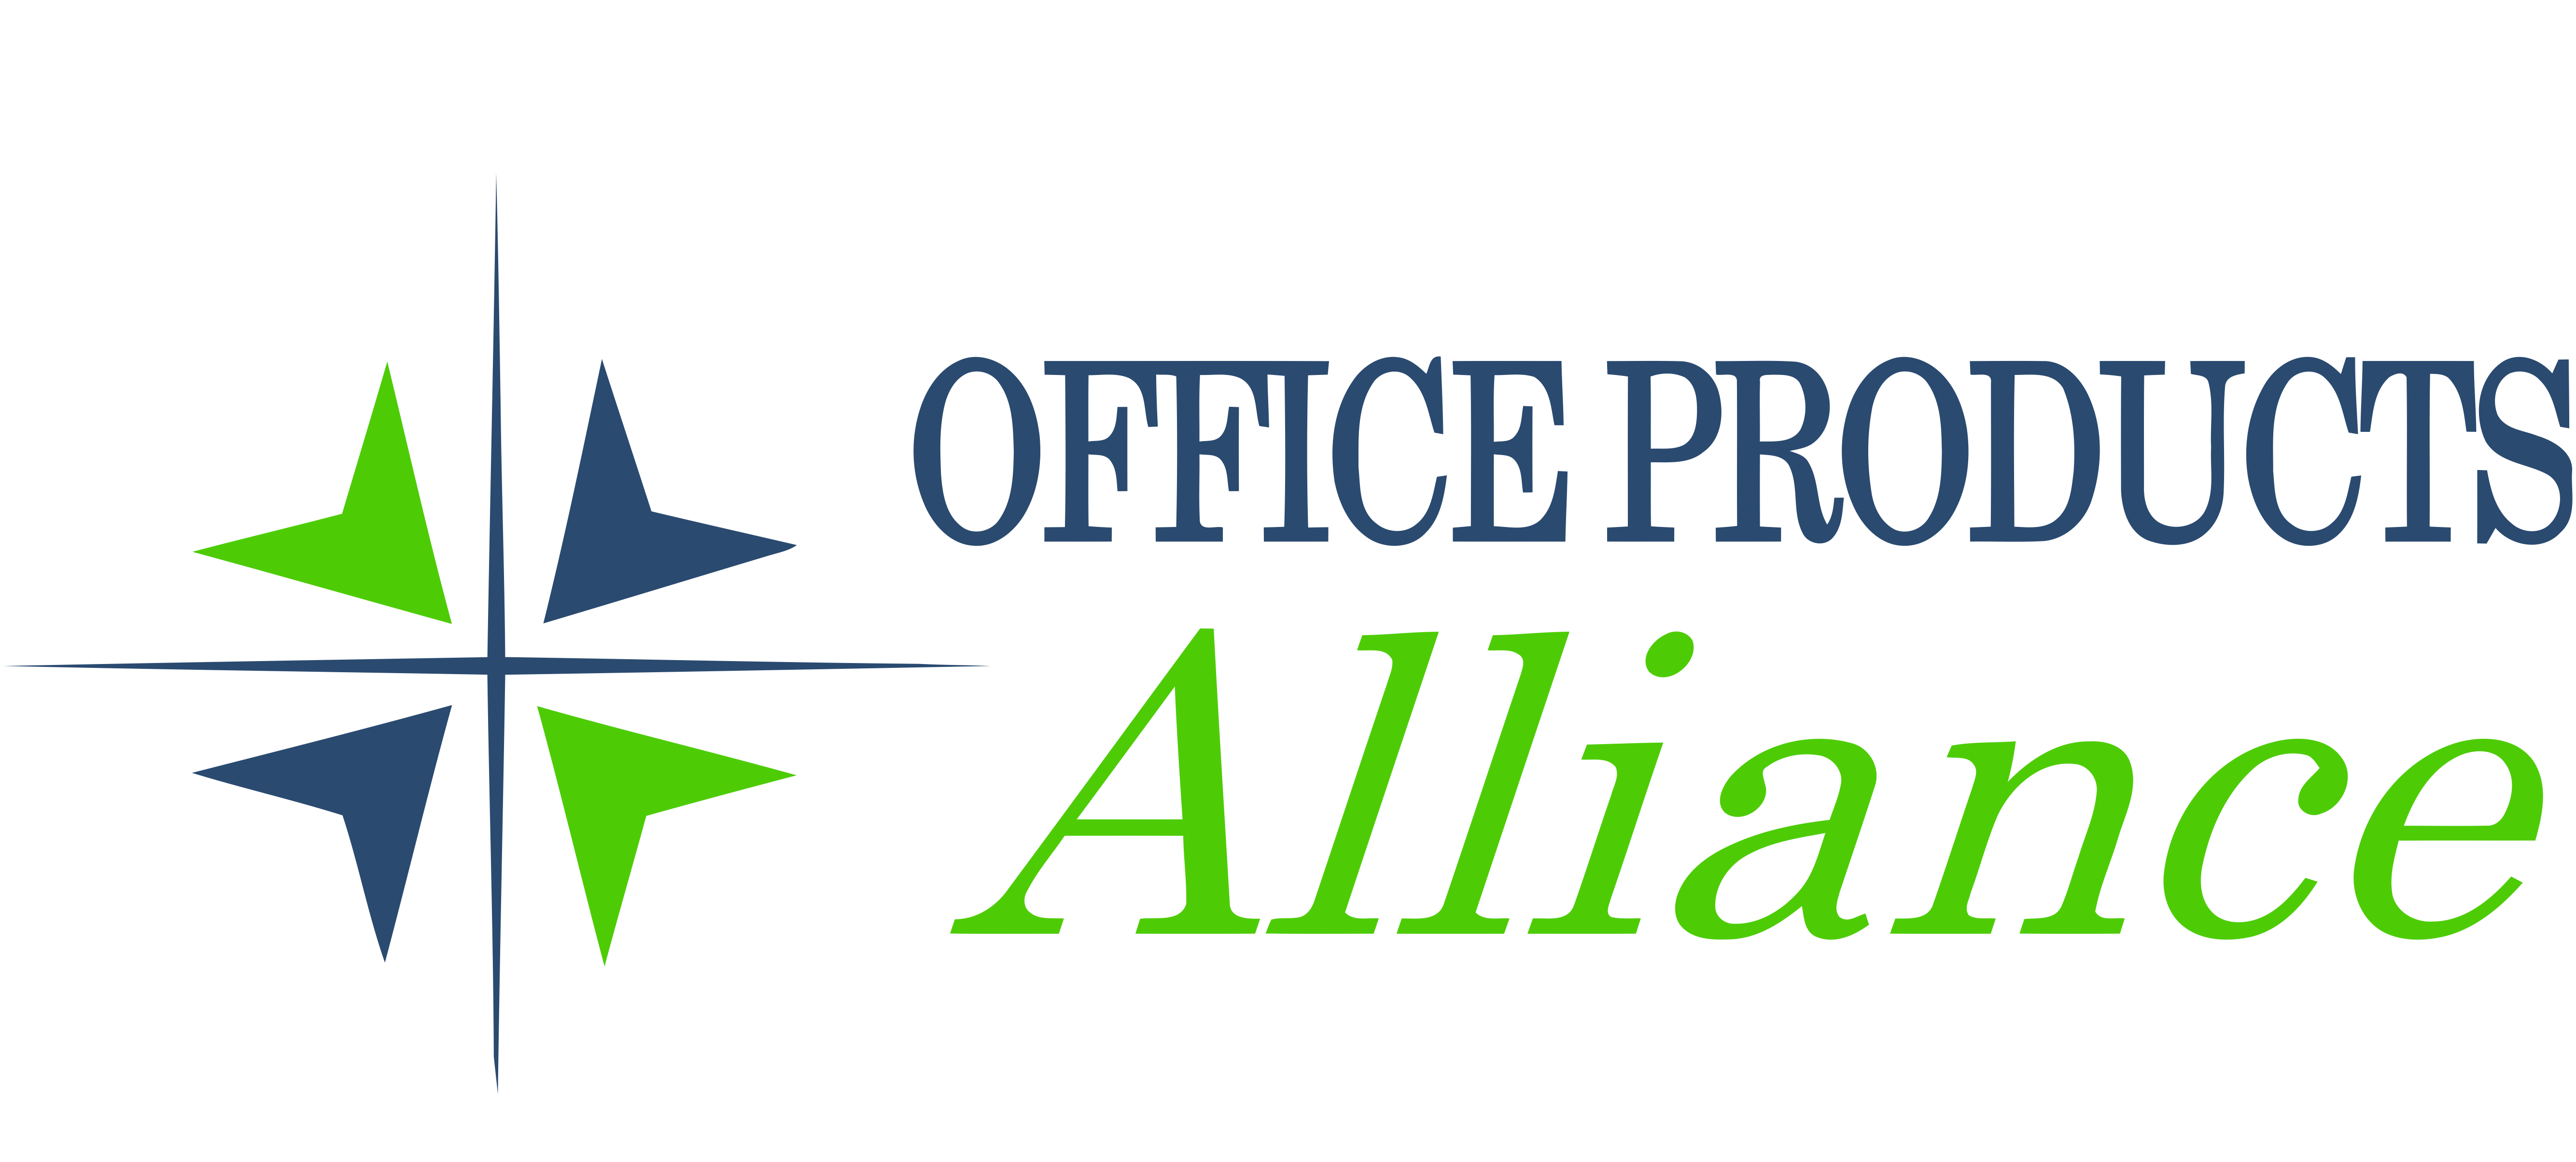 Office Products Alliance - Kansas City